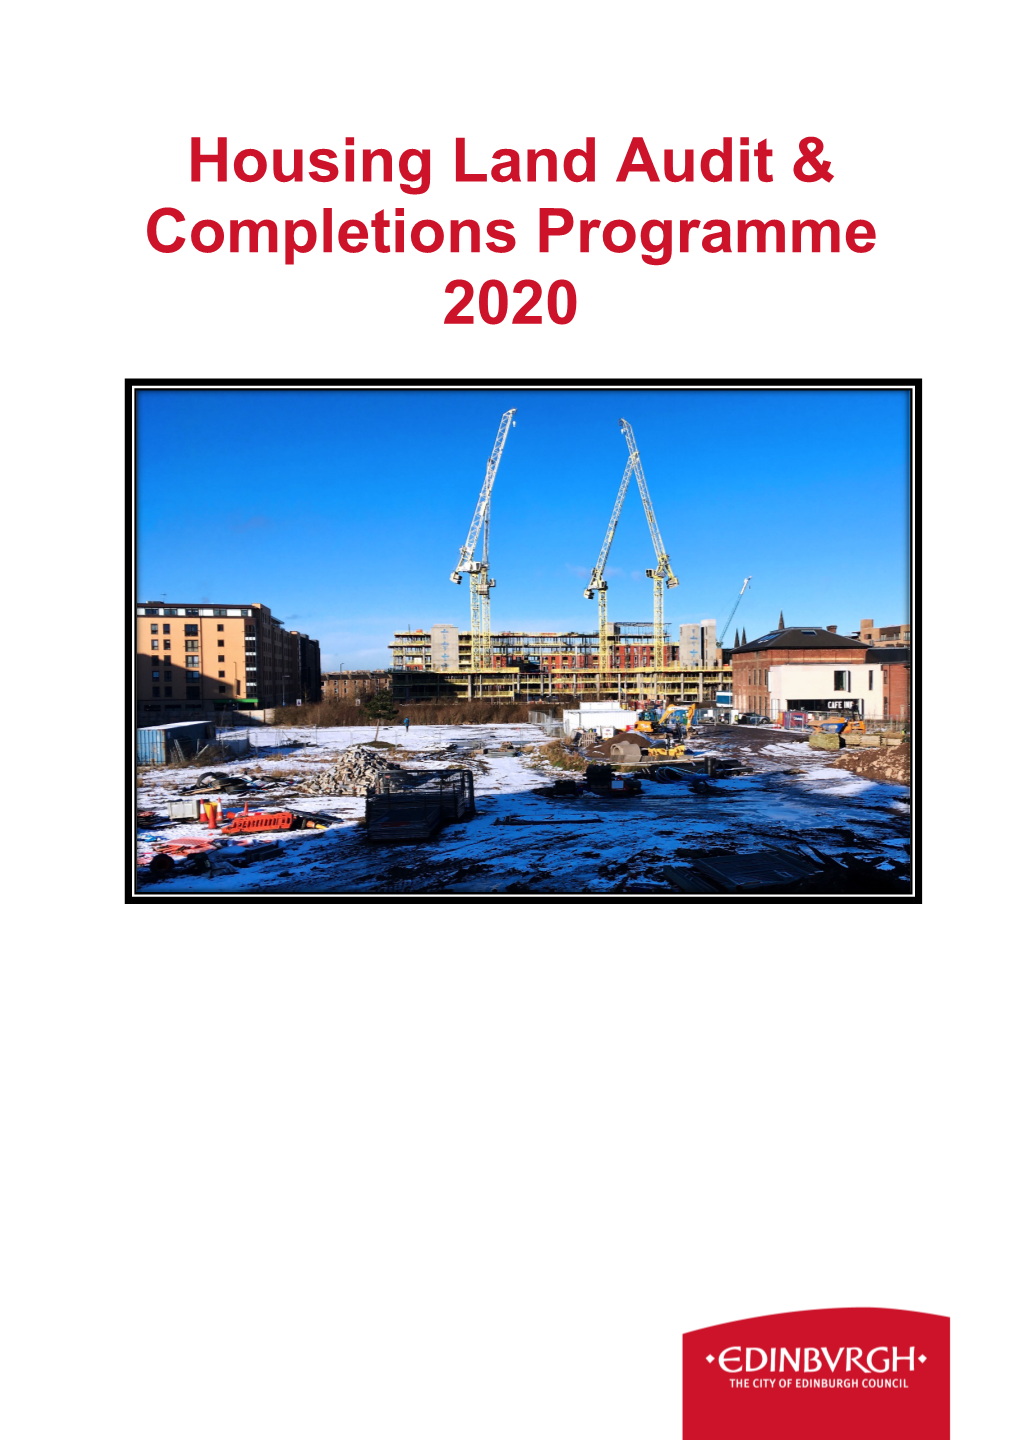 Housing Land Audit & Completions Programme 2020